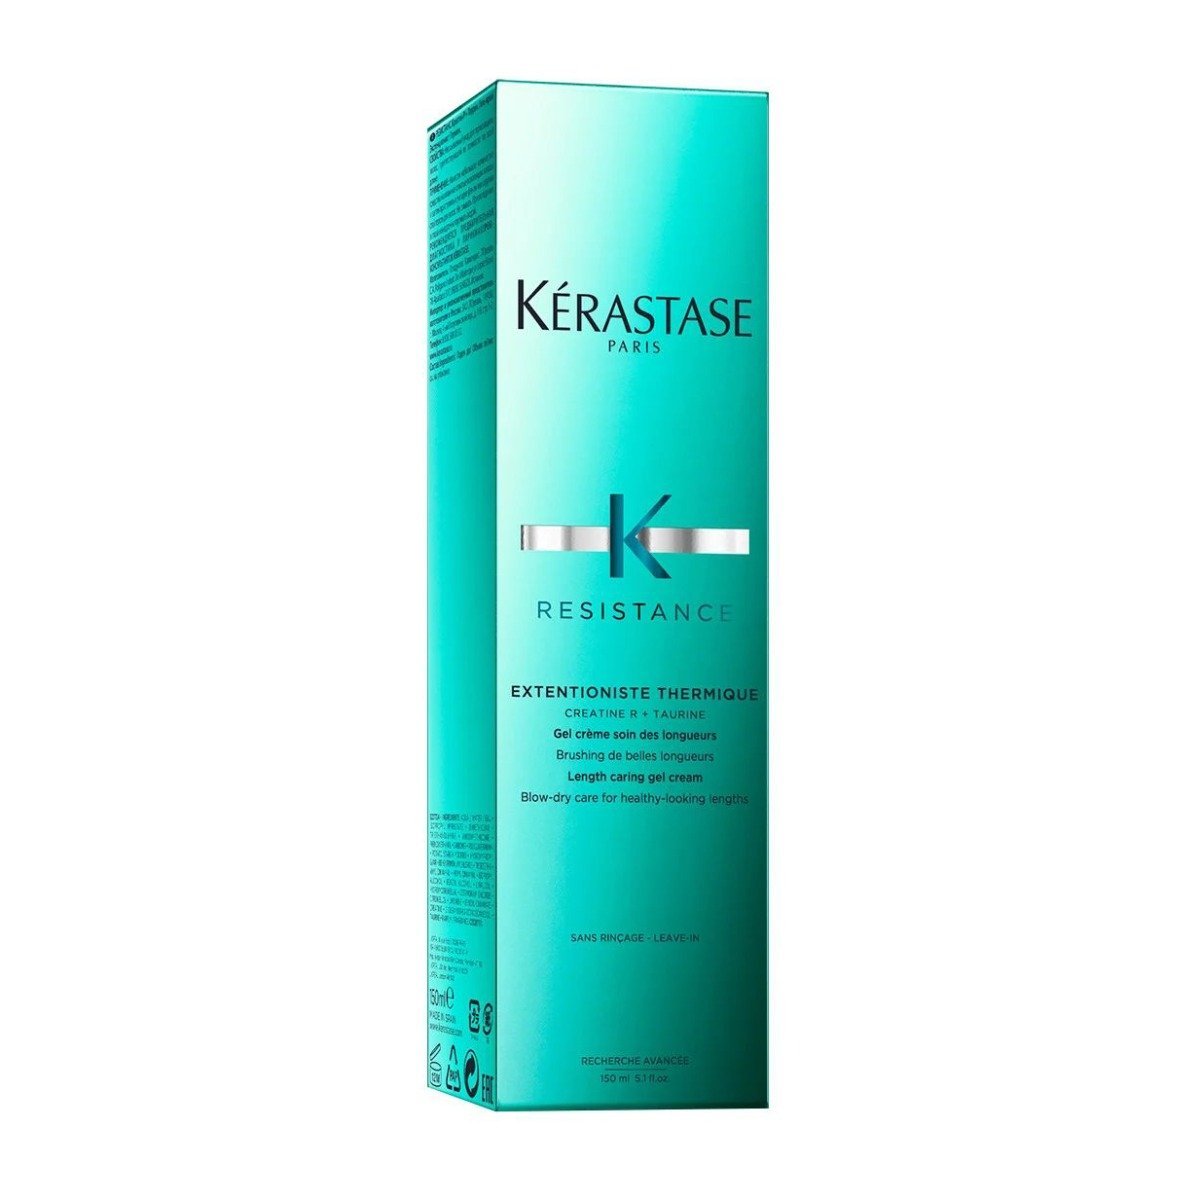 Kérastase K Resistance Extentioniste Thermique Gel Cream Blow – Dry – 150ml - Bloom Pharmacy